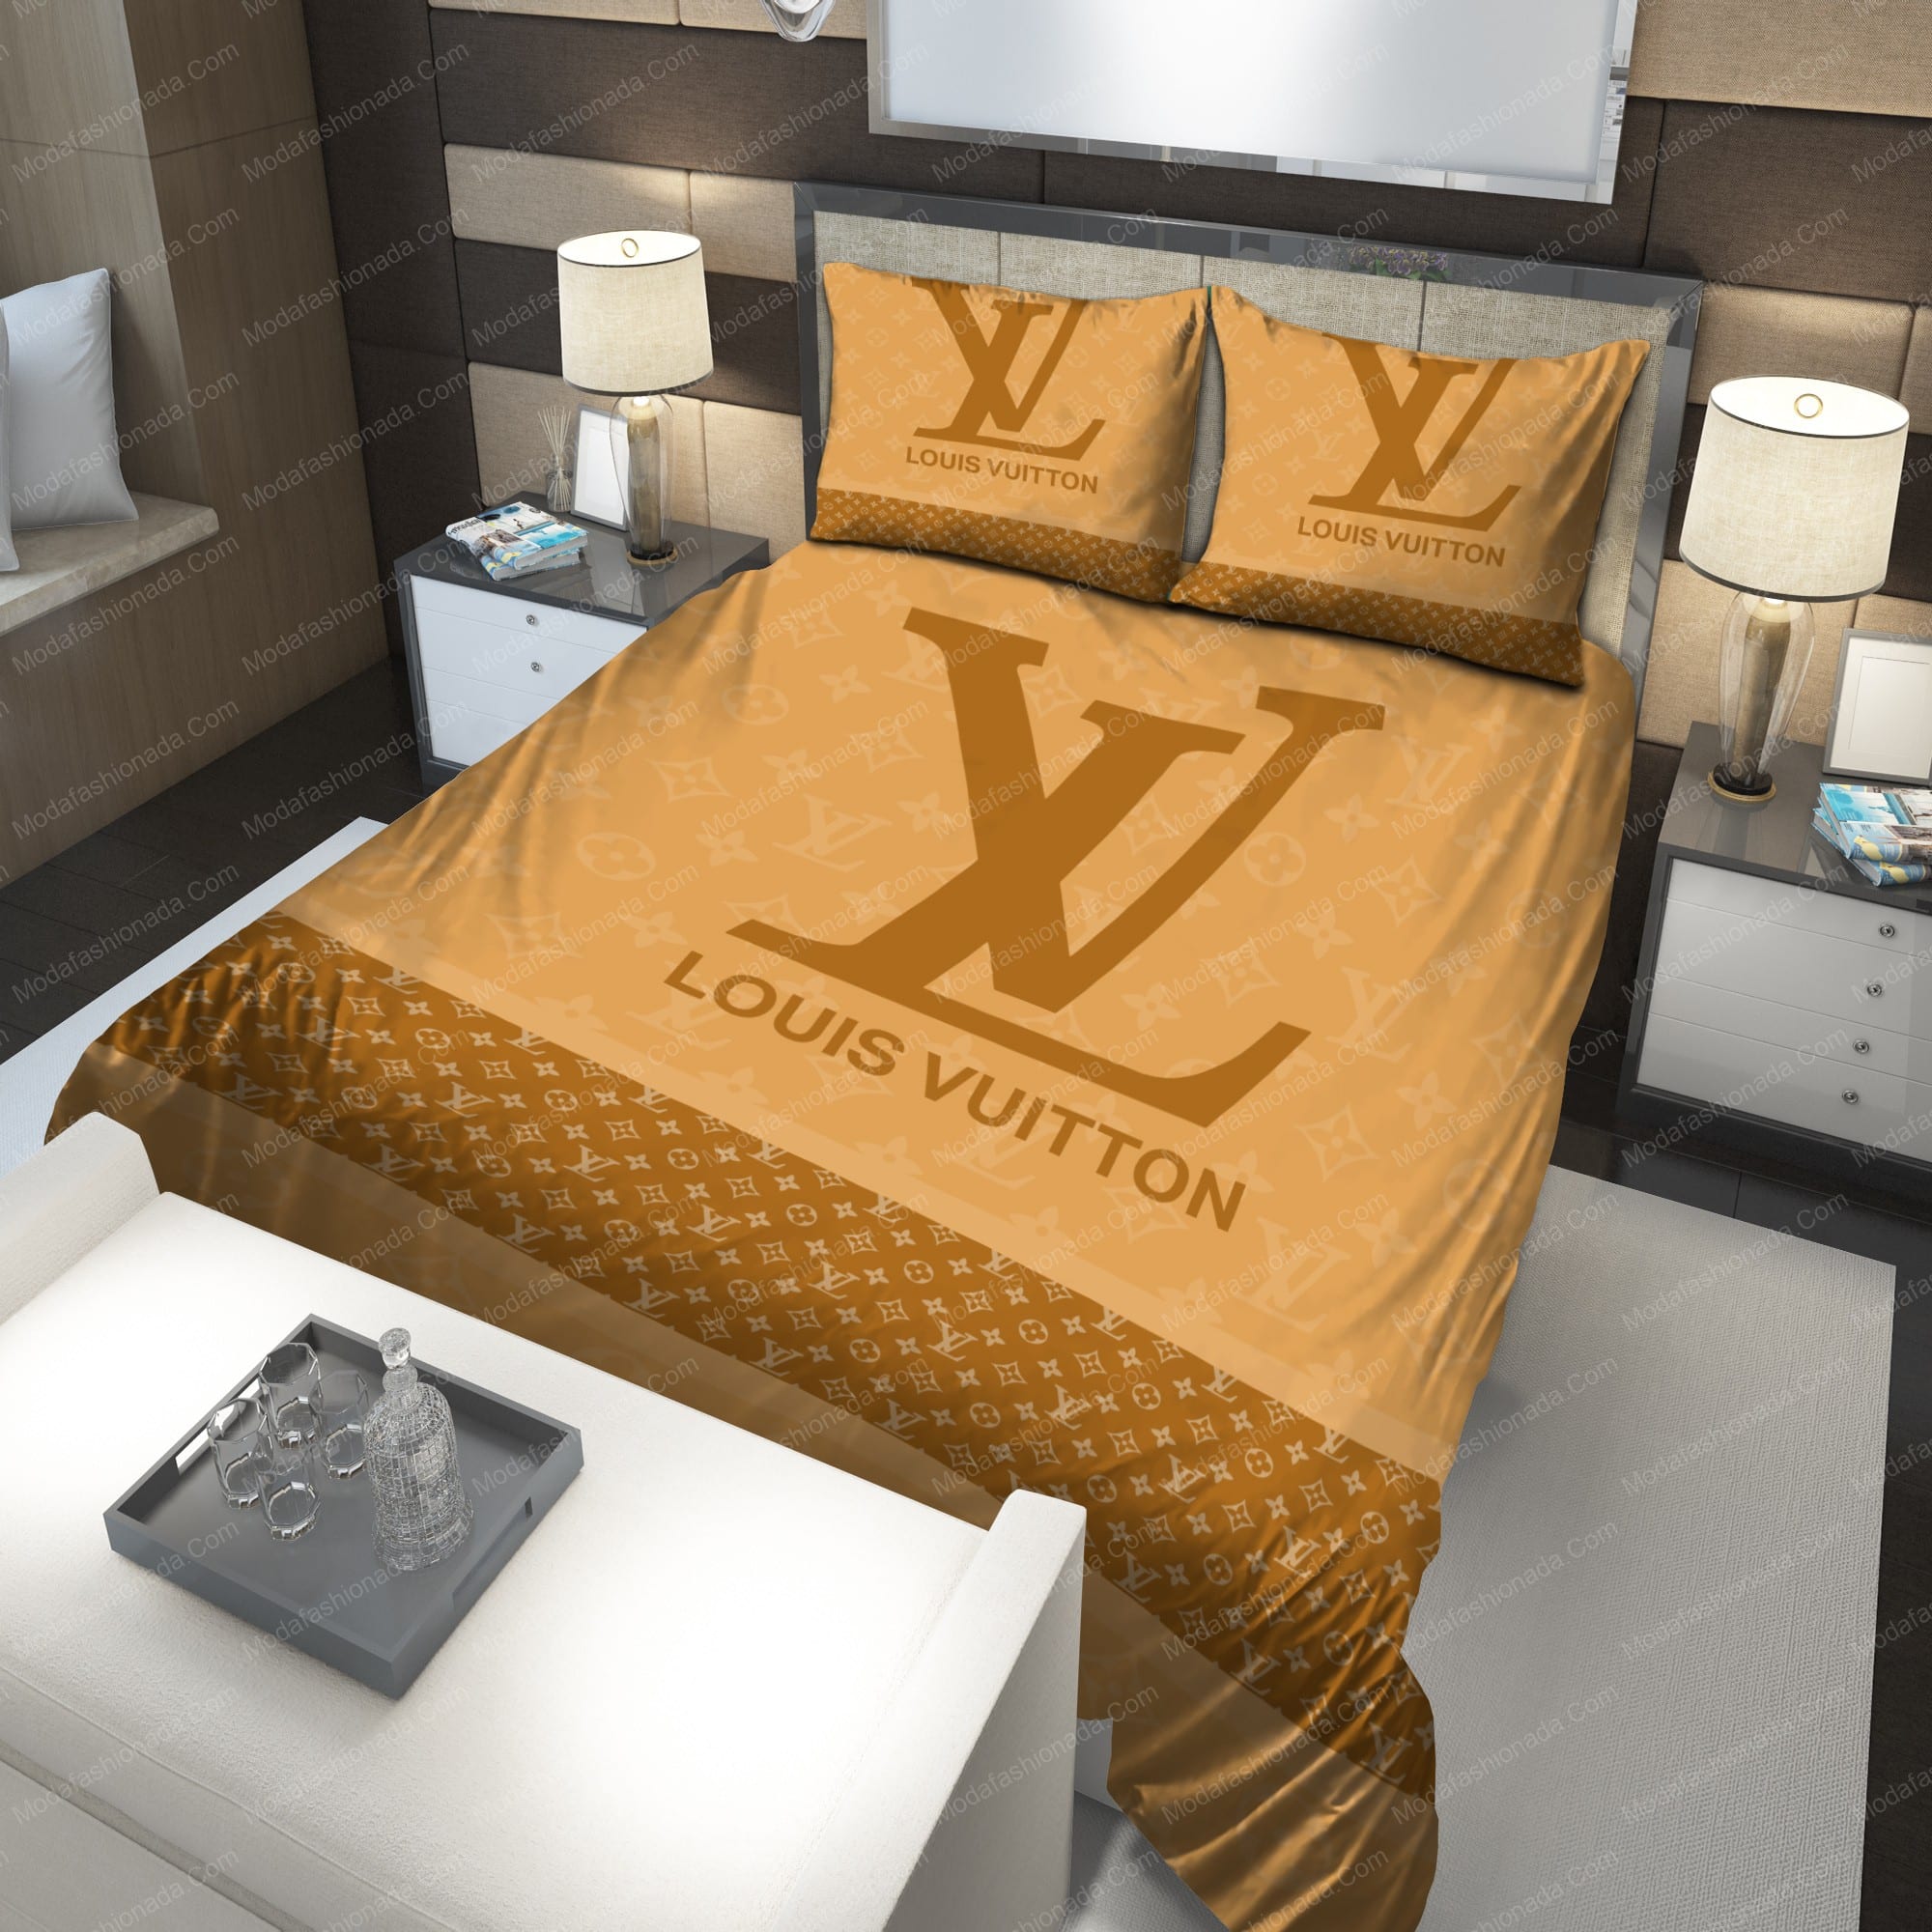 Altoncoggins Store on X: Louis Vuitton Supreme Wonder Woman Luxury Brand Bedding  Set Duvet Cover Bedspread Home Decor  / X